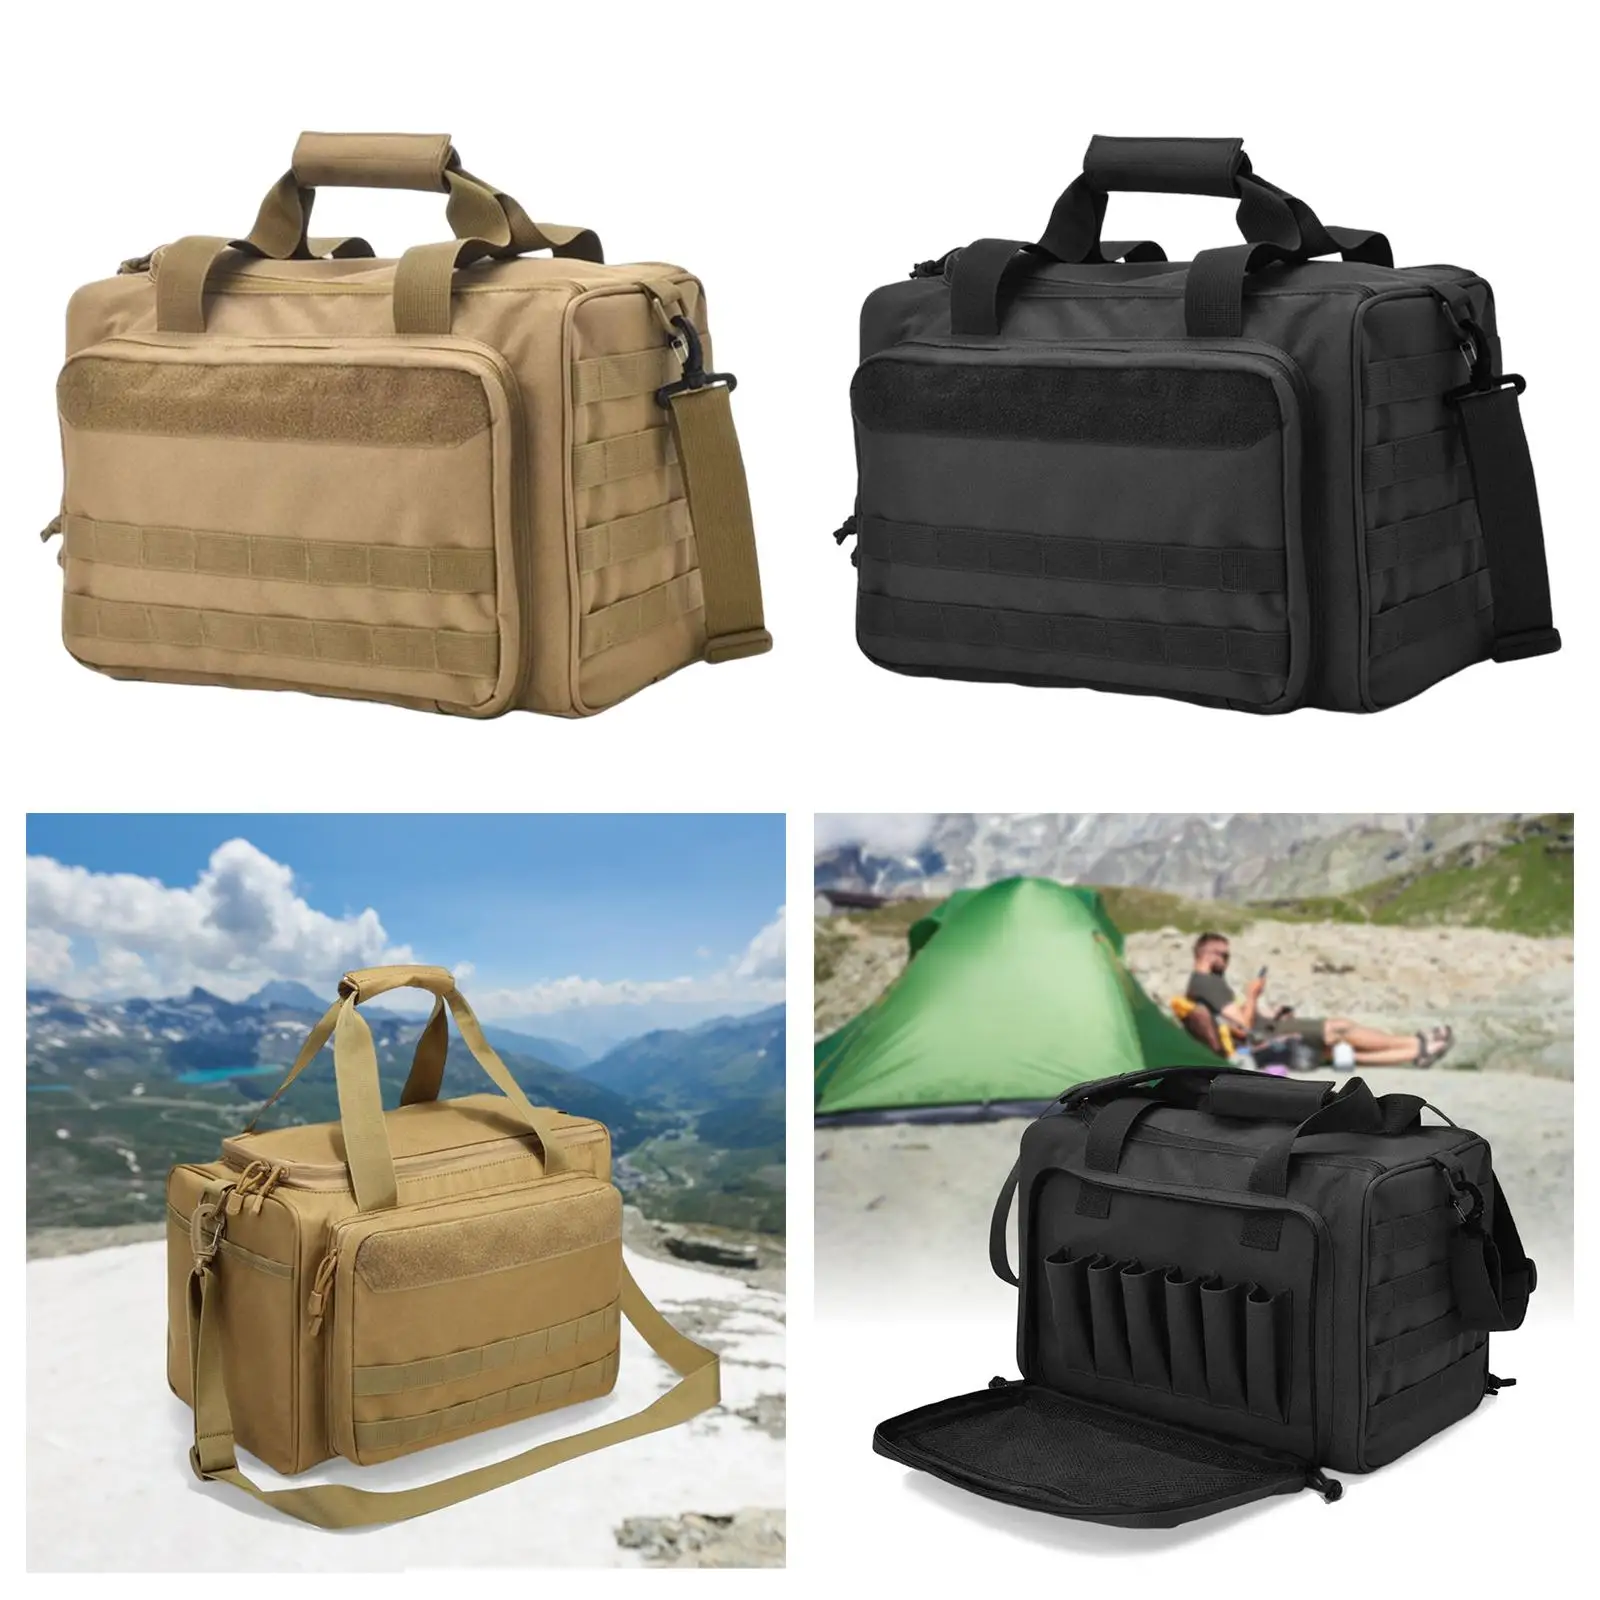 Range Bag Handbag Large Capacity Luggage Bag Tote  Outdoor  Resistant Shoulder Bag Travel Duffel Bag for Hiking Climbing